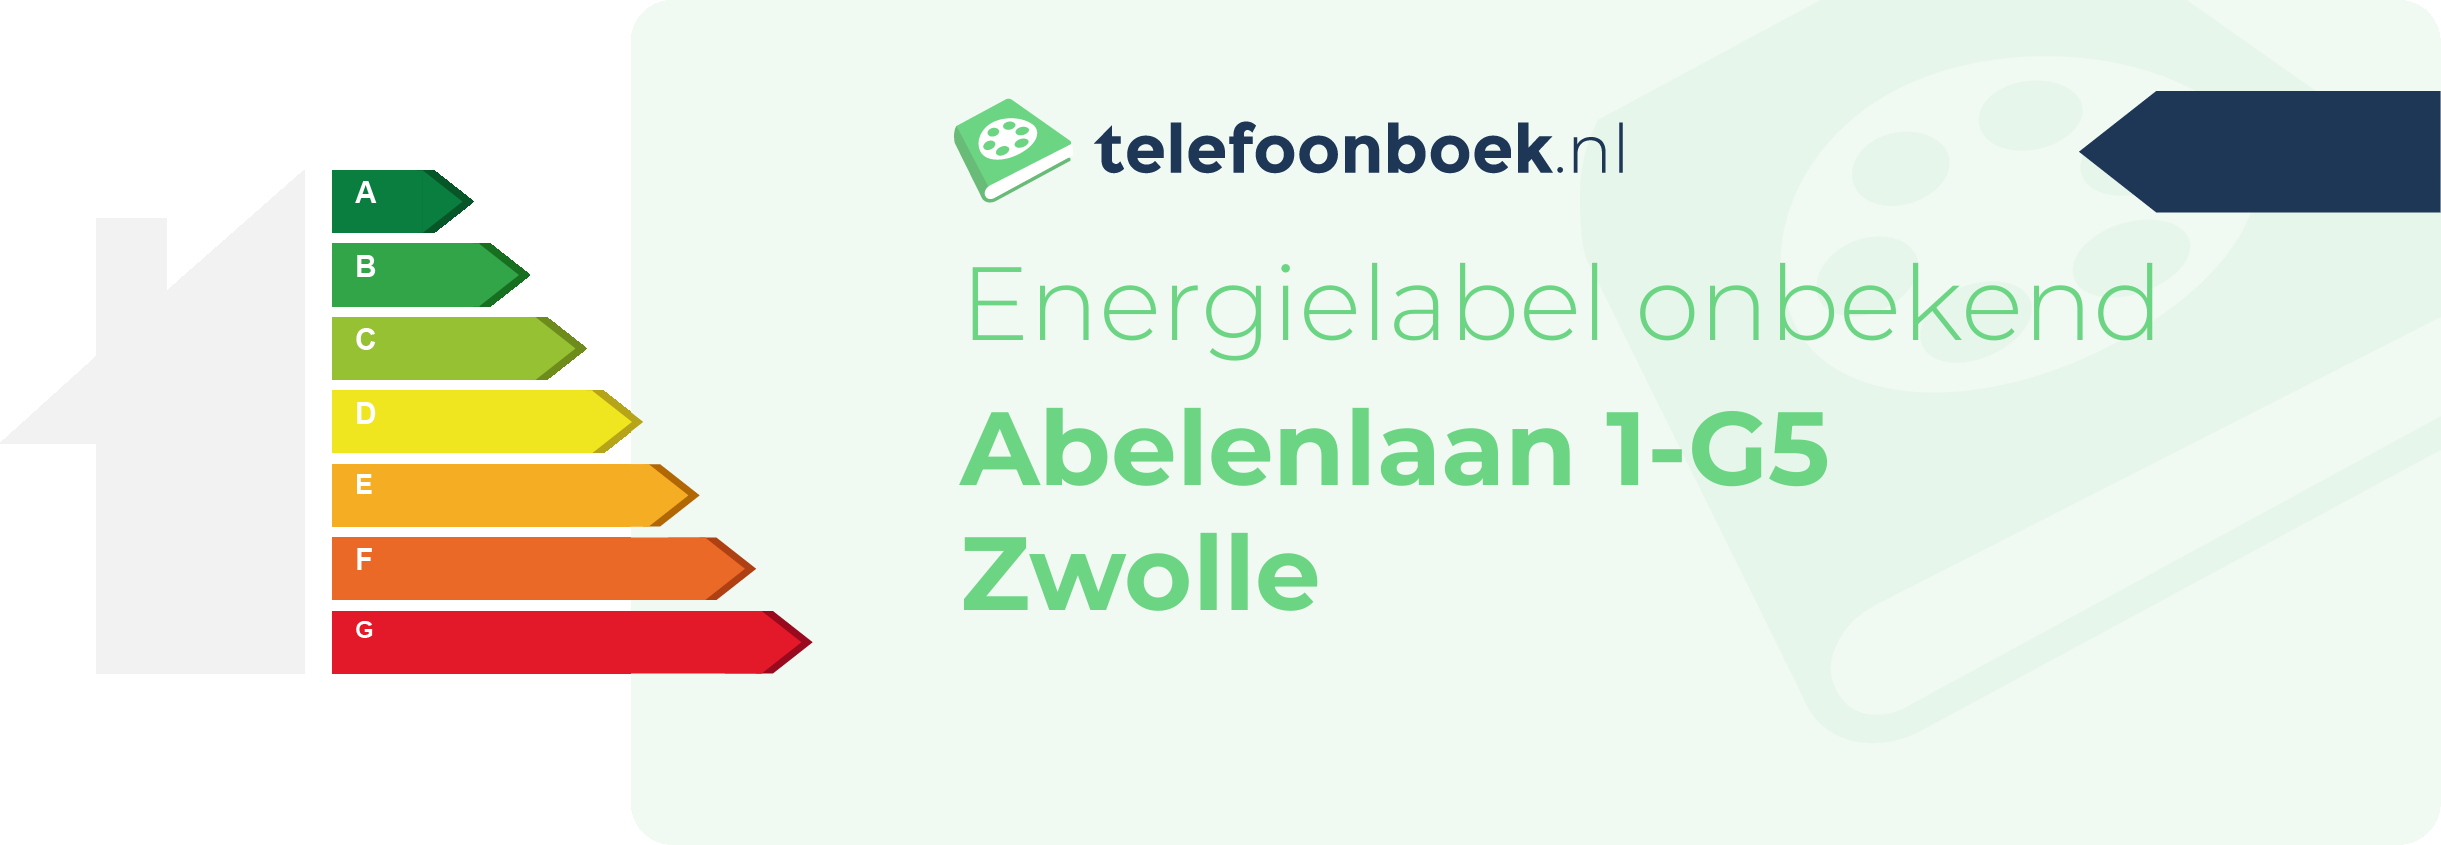 Energielabel Abelenlaan 1-G5 Zwolle